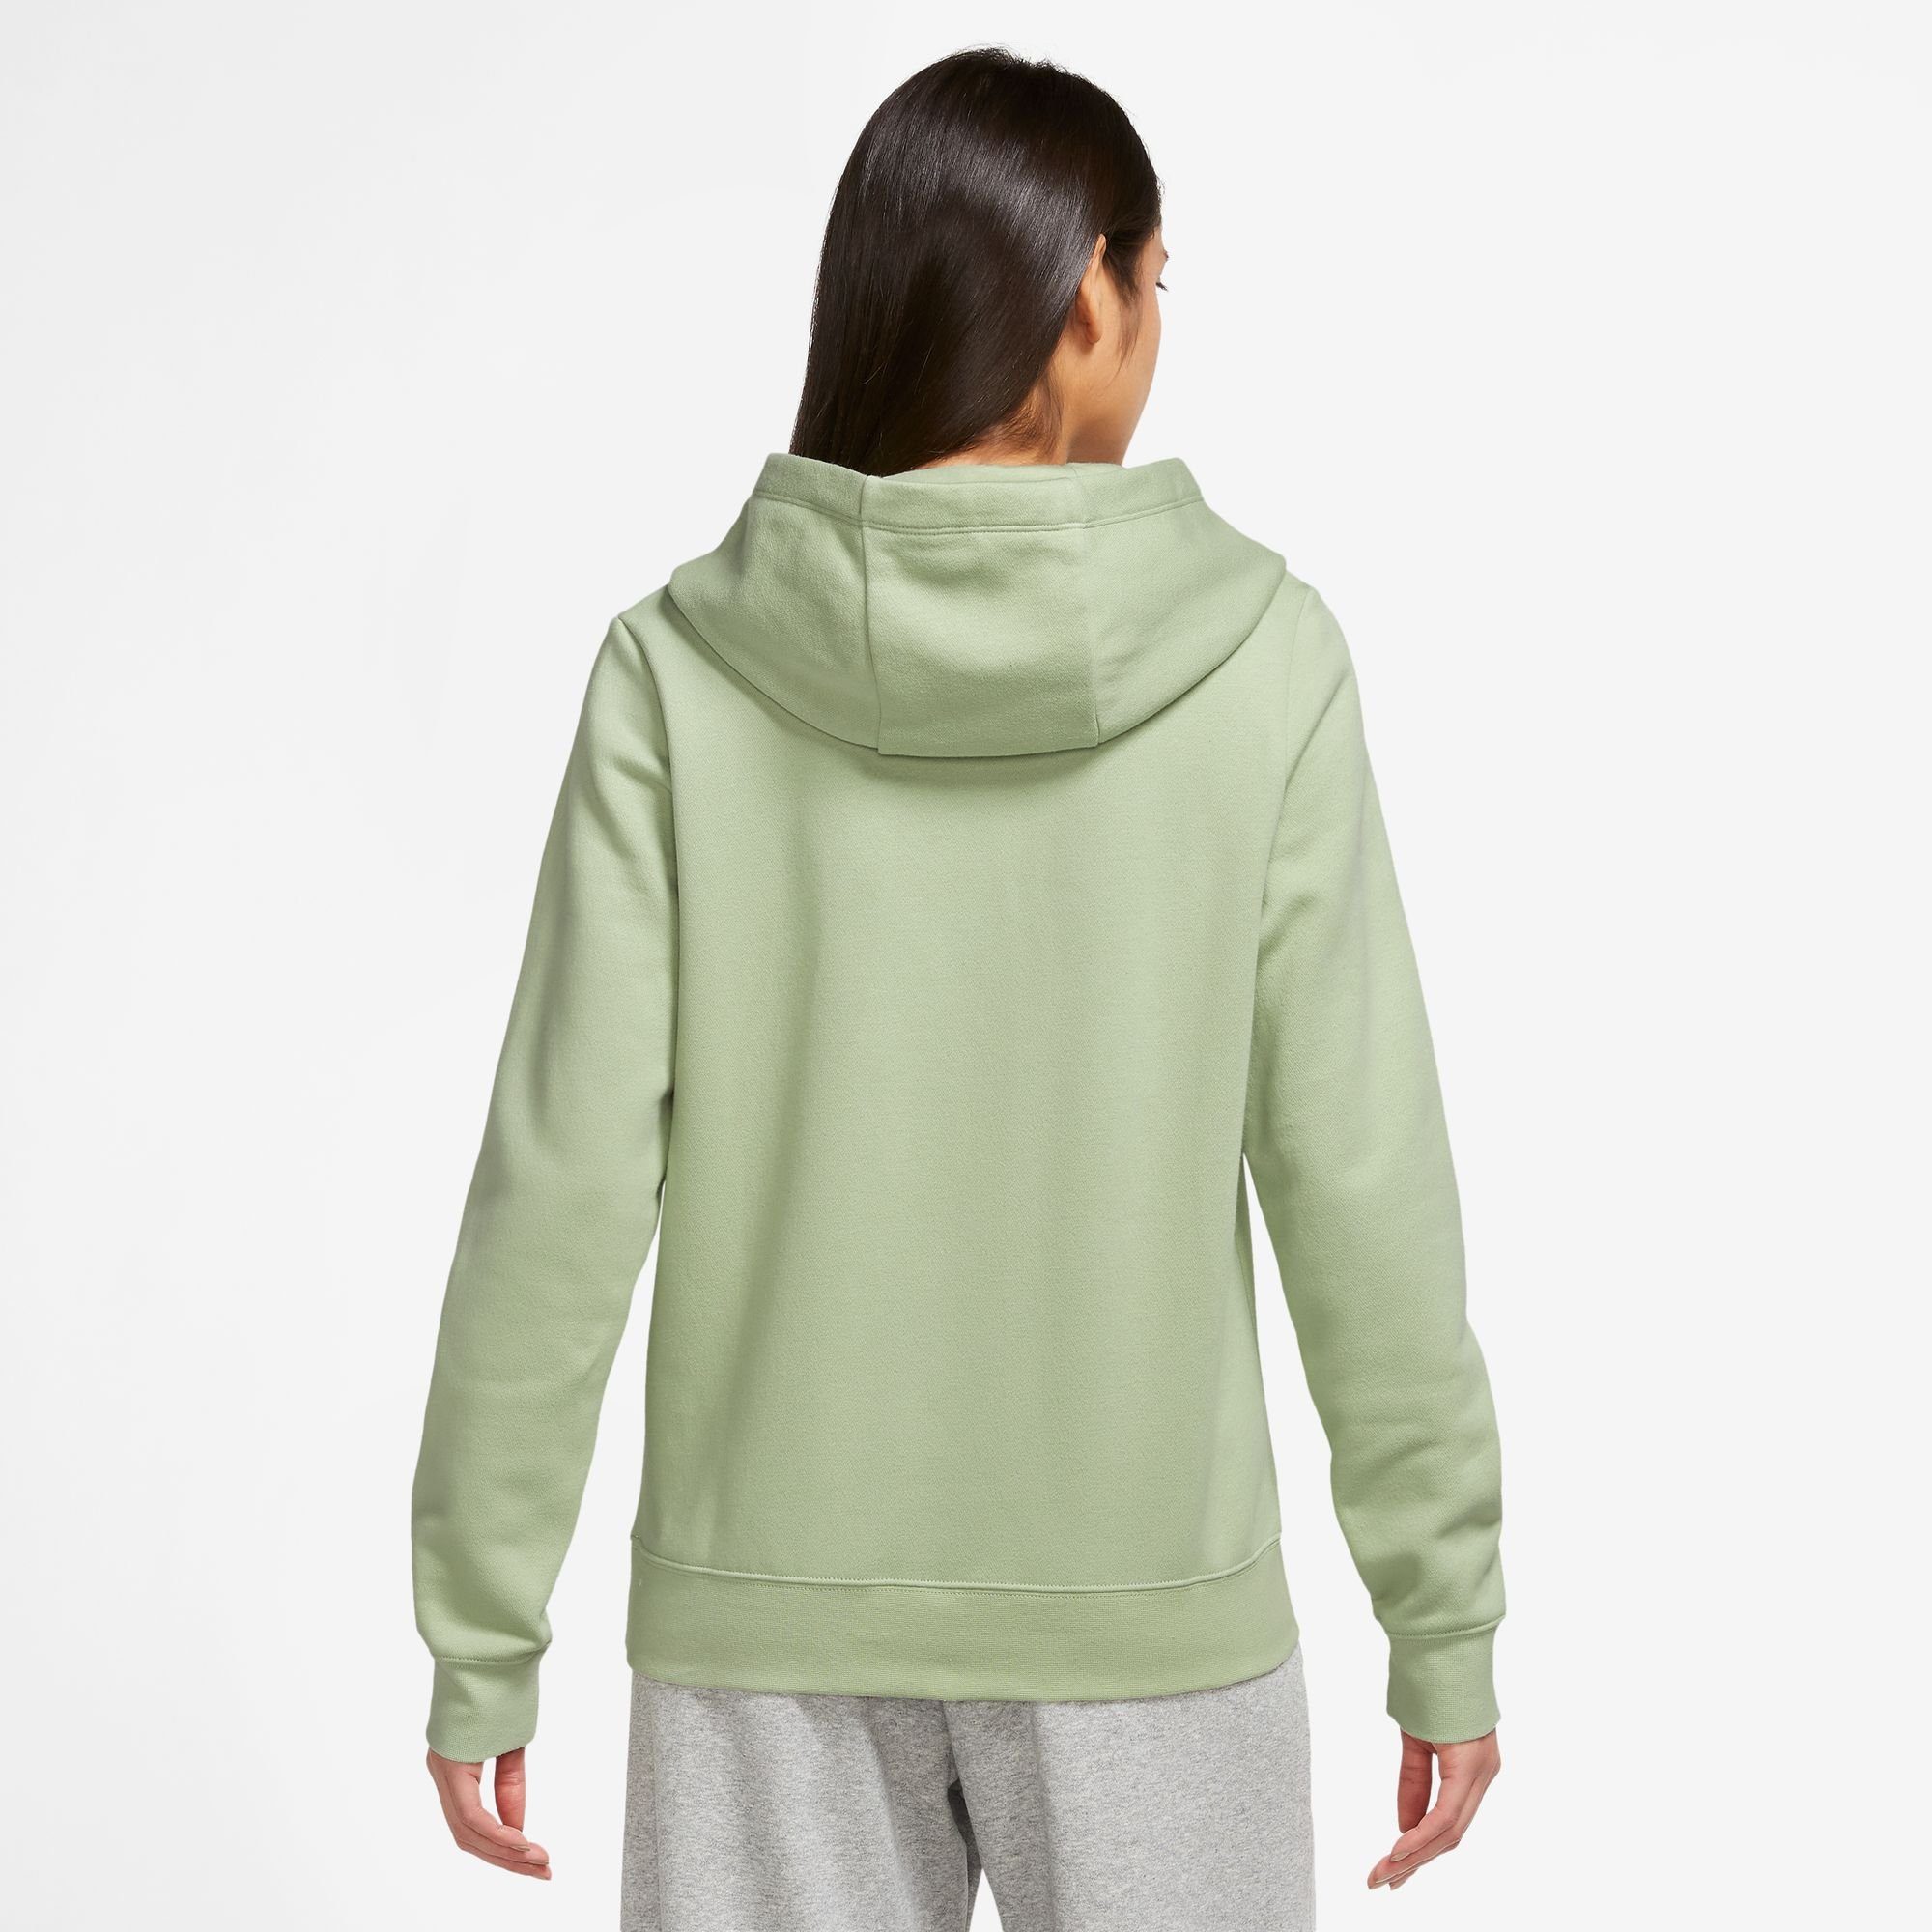 HONEYDEW/WHITE Nike Kapuzensweatshirt Club Logo Hoodie Pullover Sportswear Fleece Women's